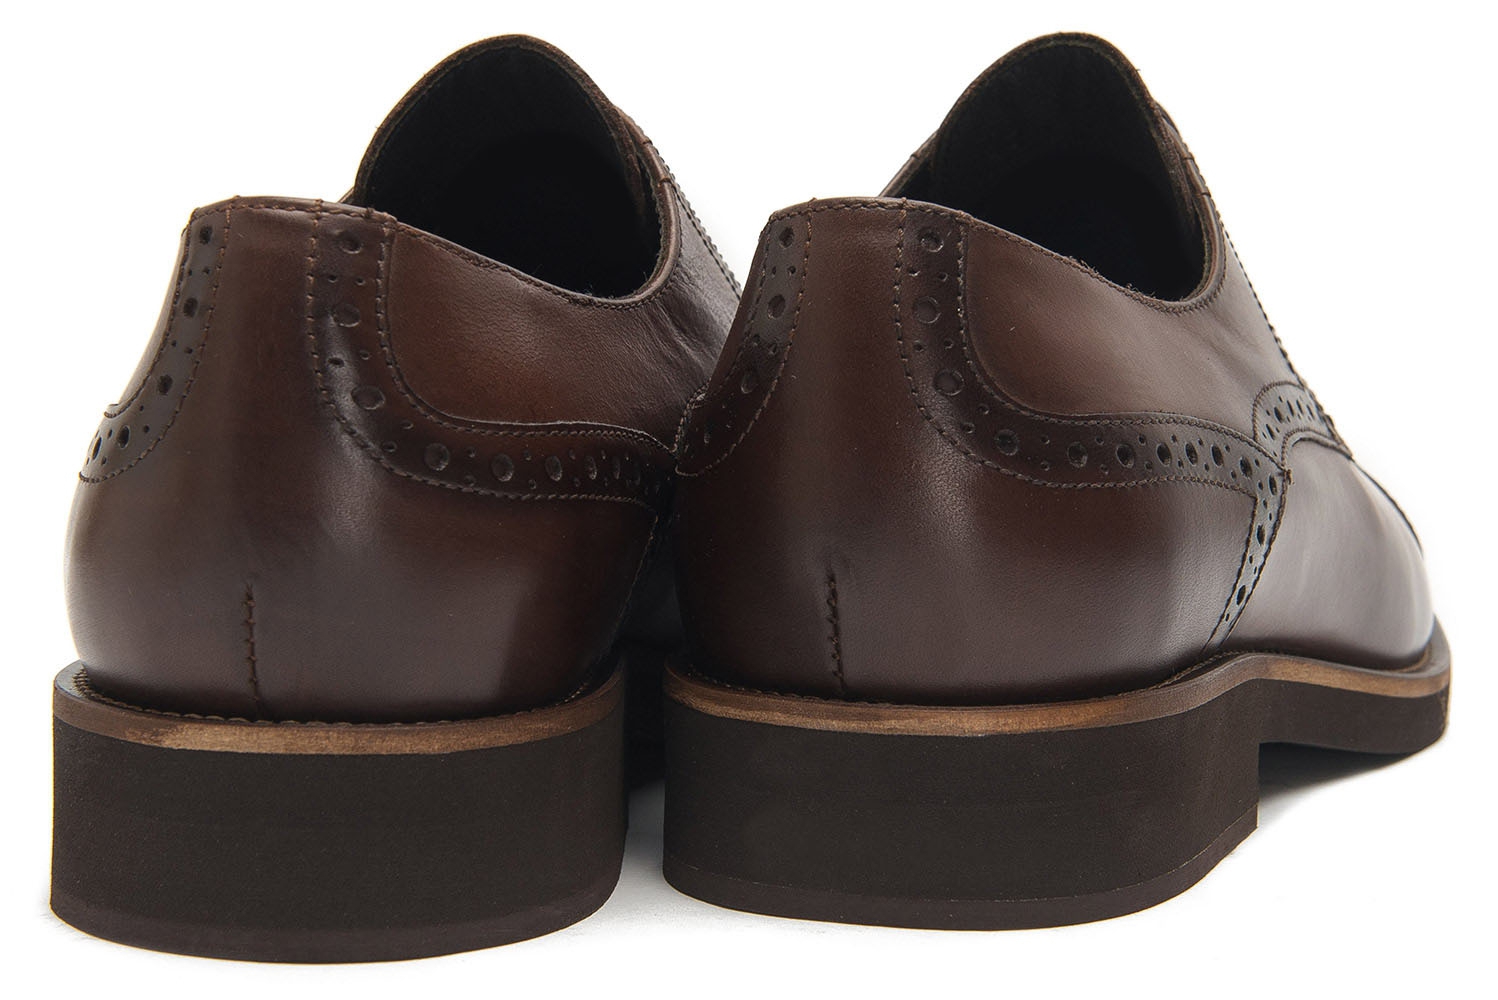 Pantofi Bigotti  maro piele naturala 2